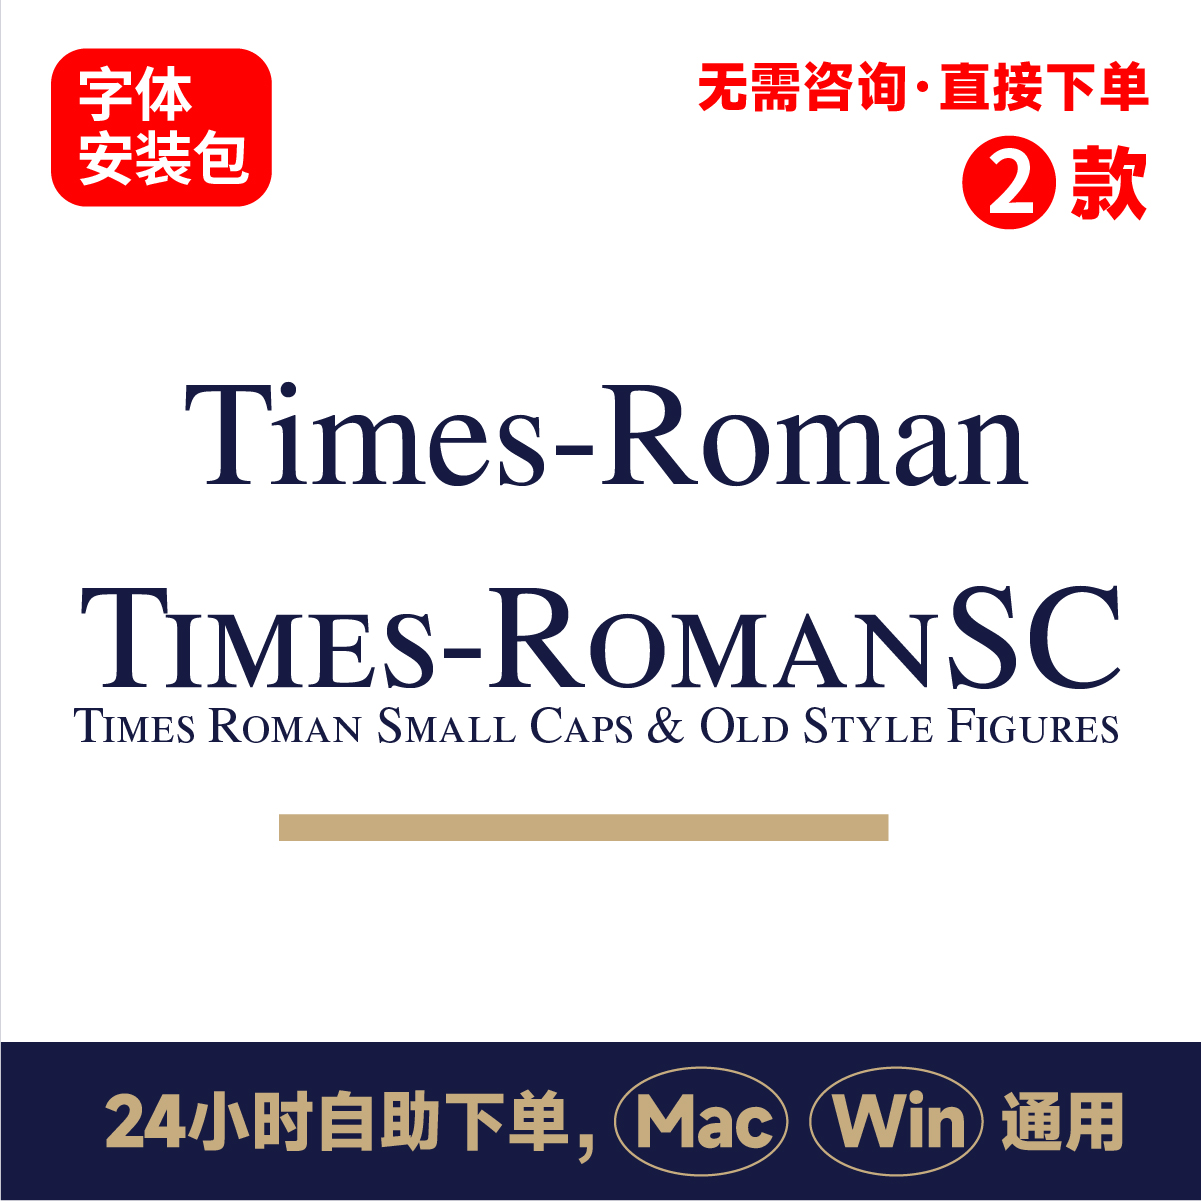 Times-Roman Times Roman Small Caps & Old Style 英文字体171